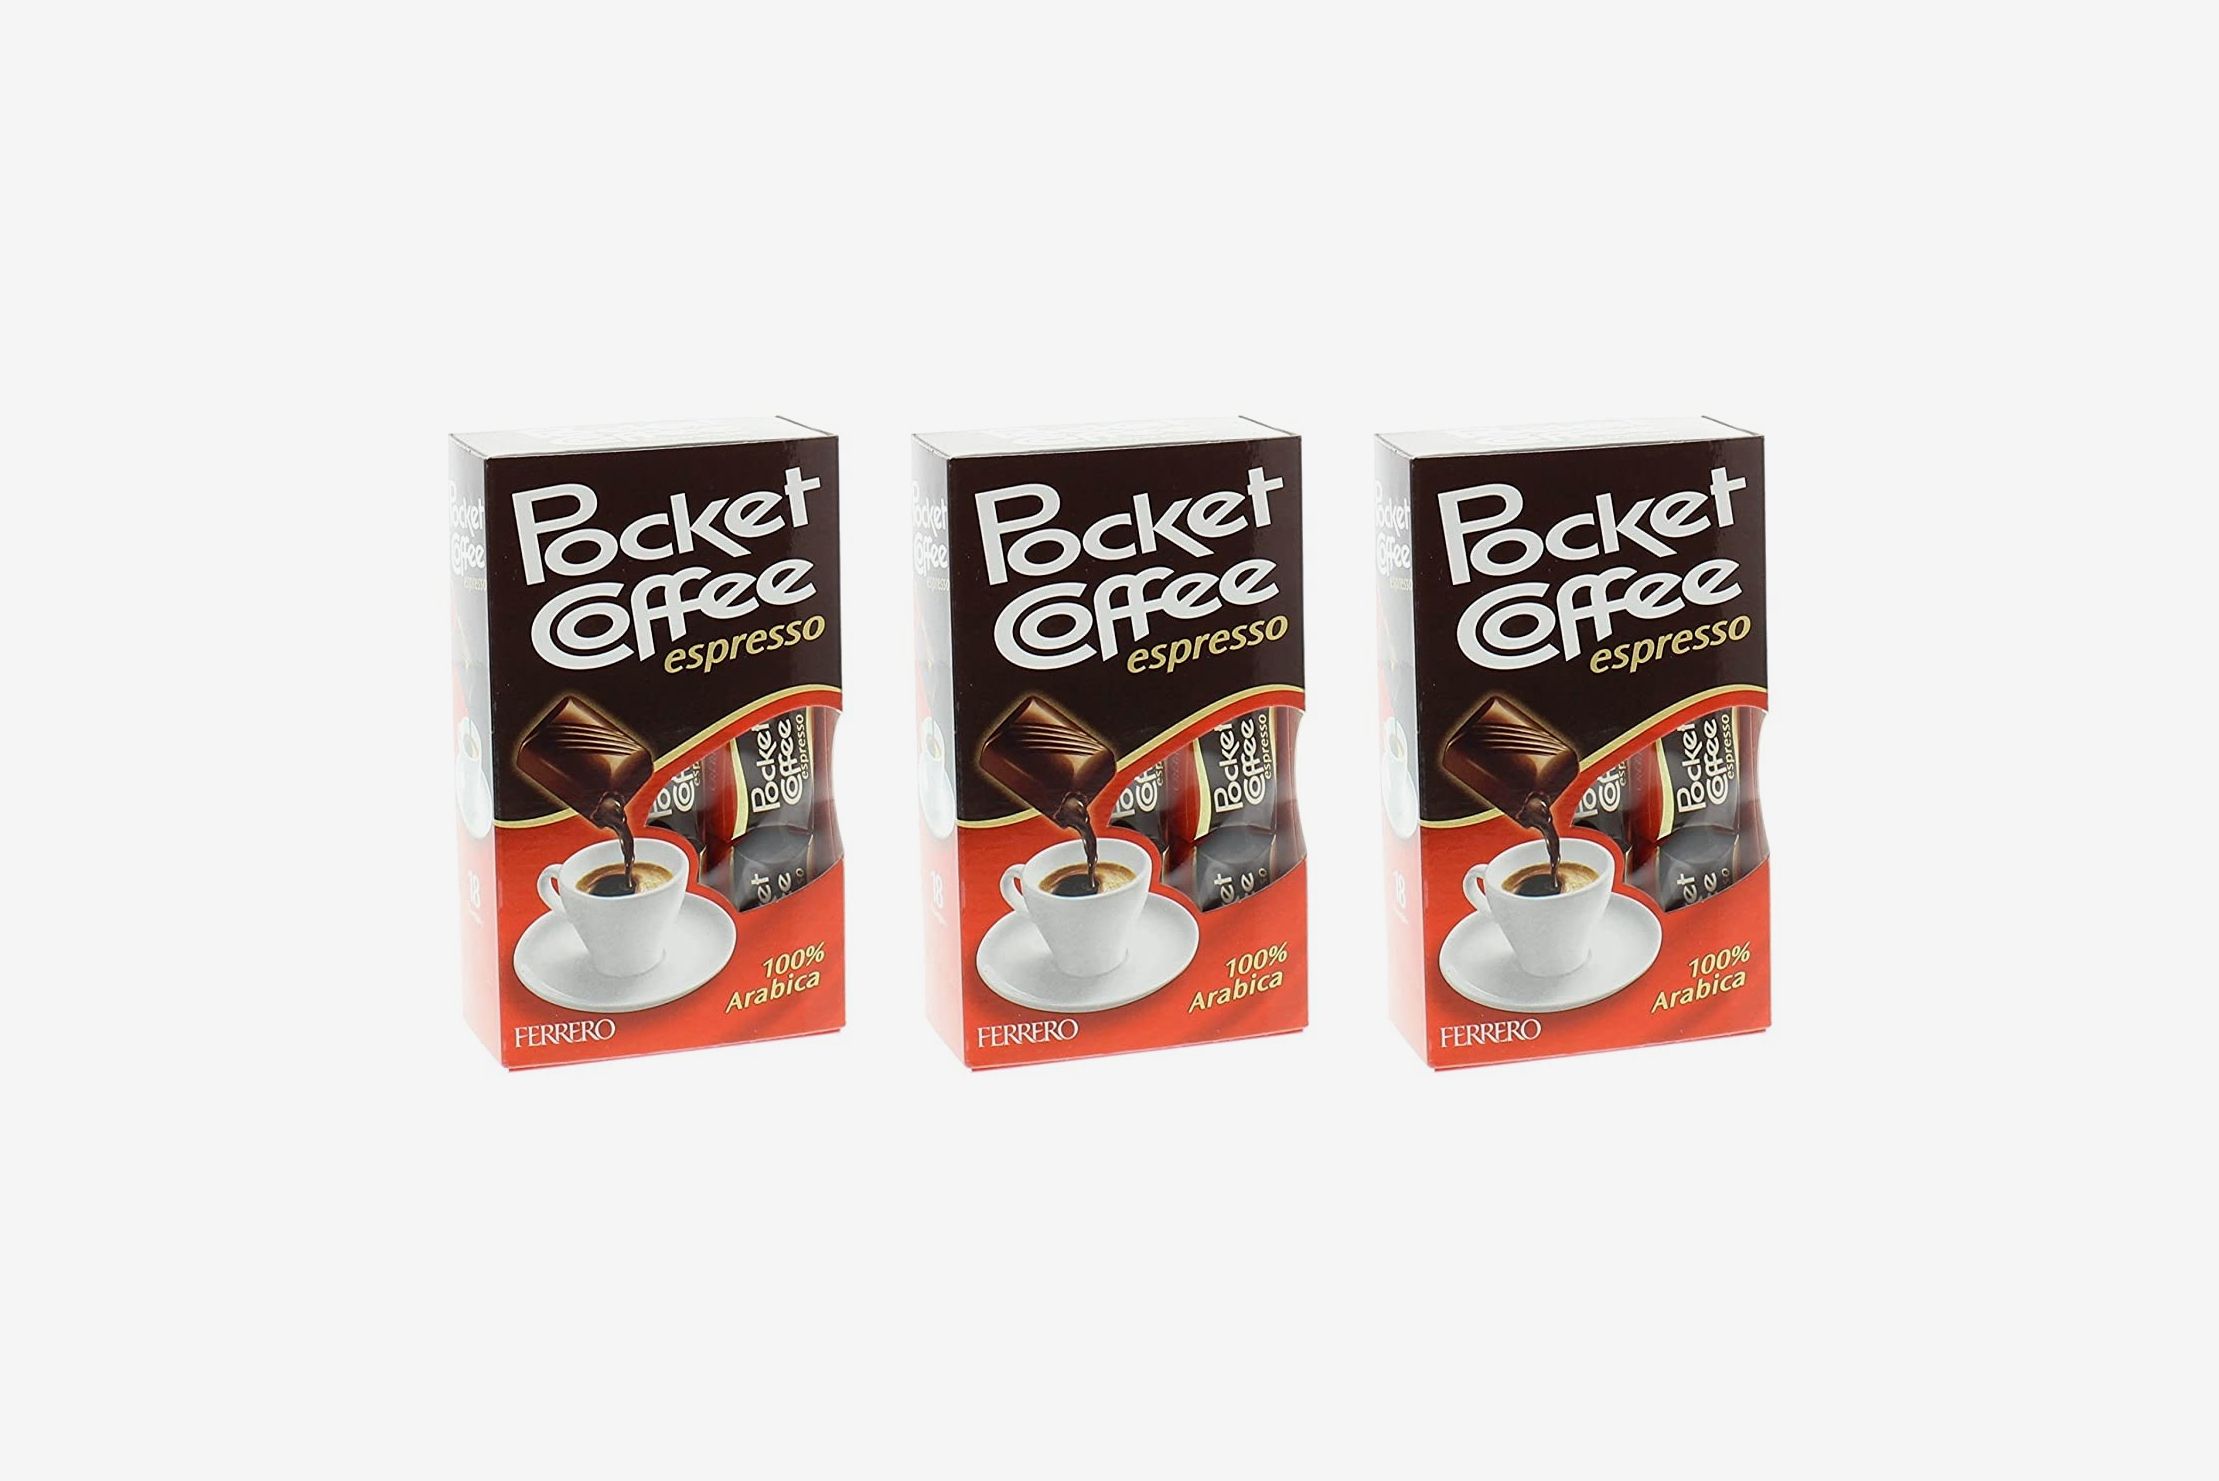 Pocket Coffee Classic and Decaffeinated Espresso. Pocket Coffee is